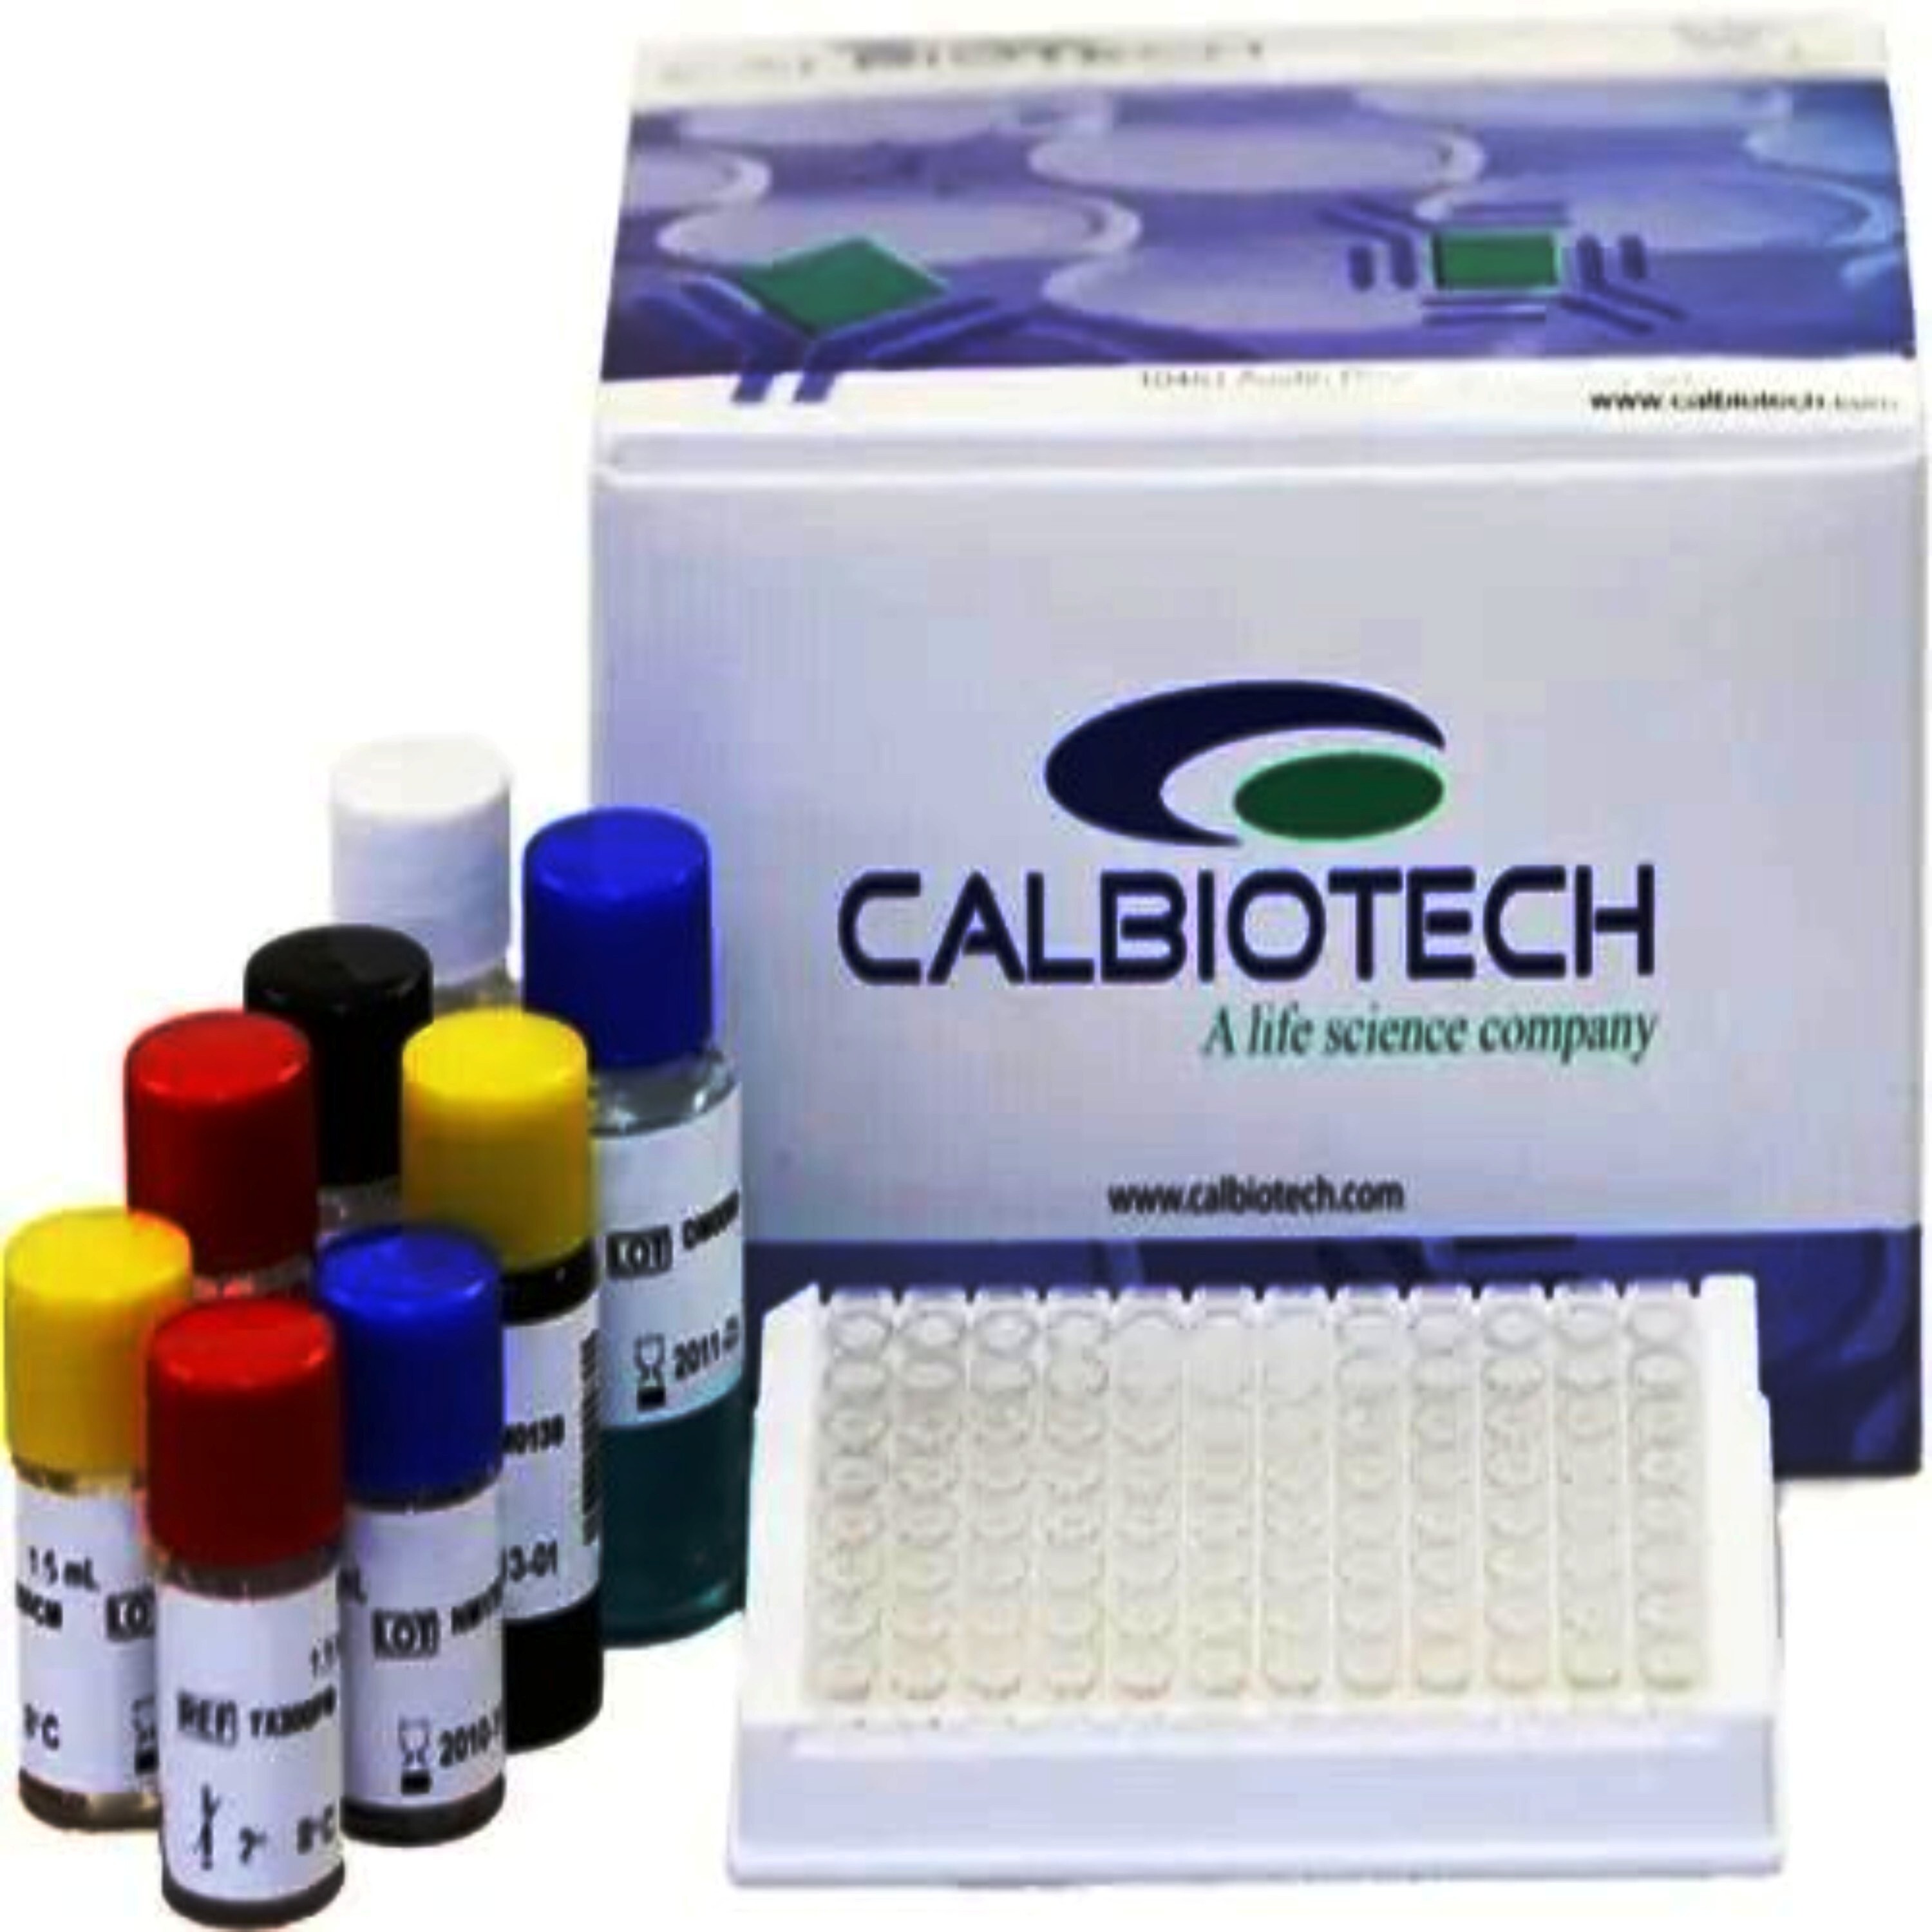 Calbiotech Cardiolipin IgM Elisa Kit